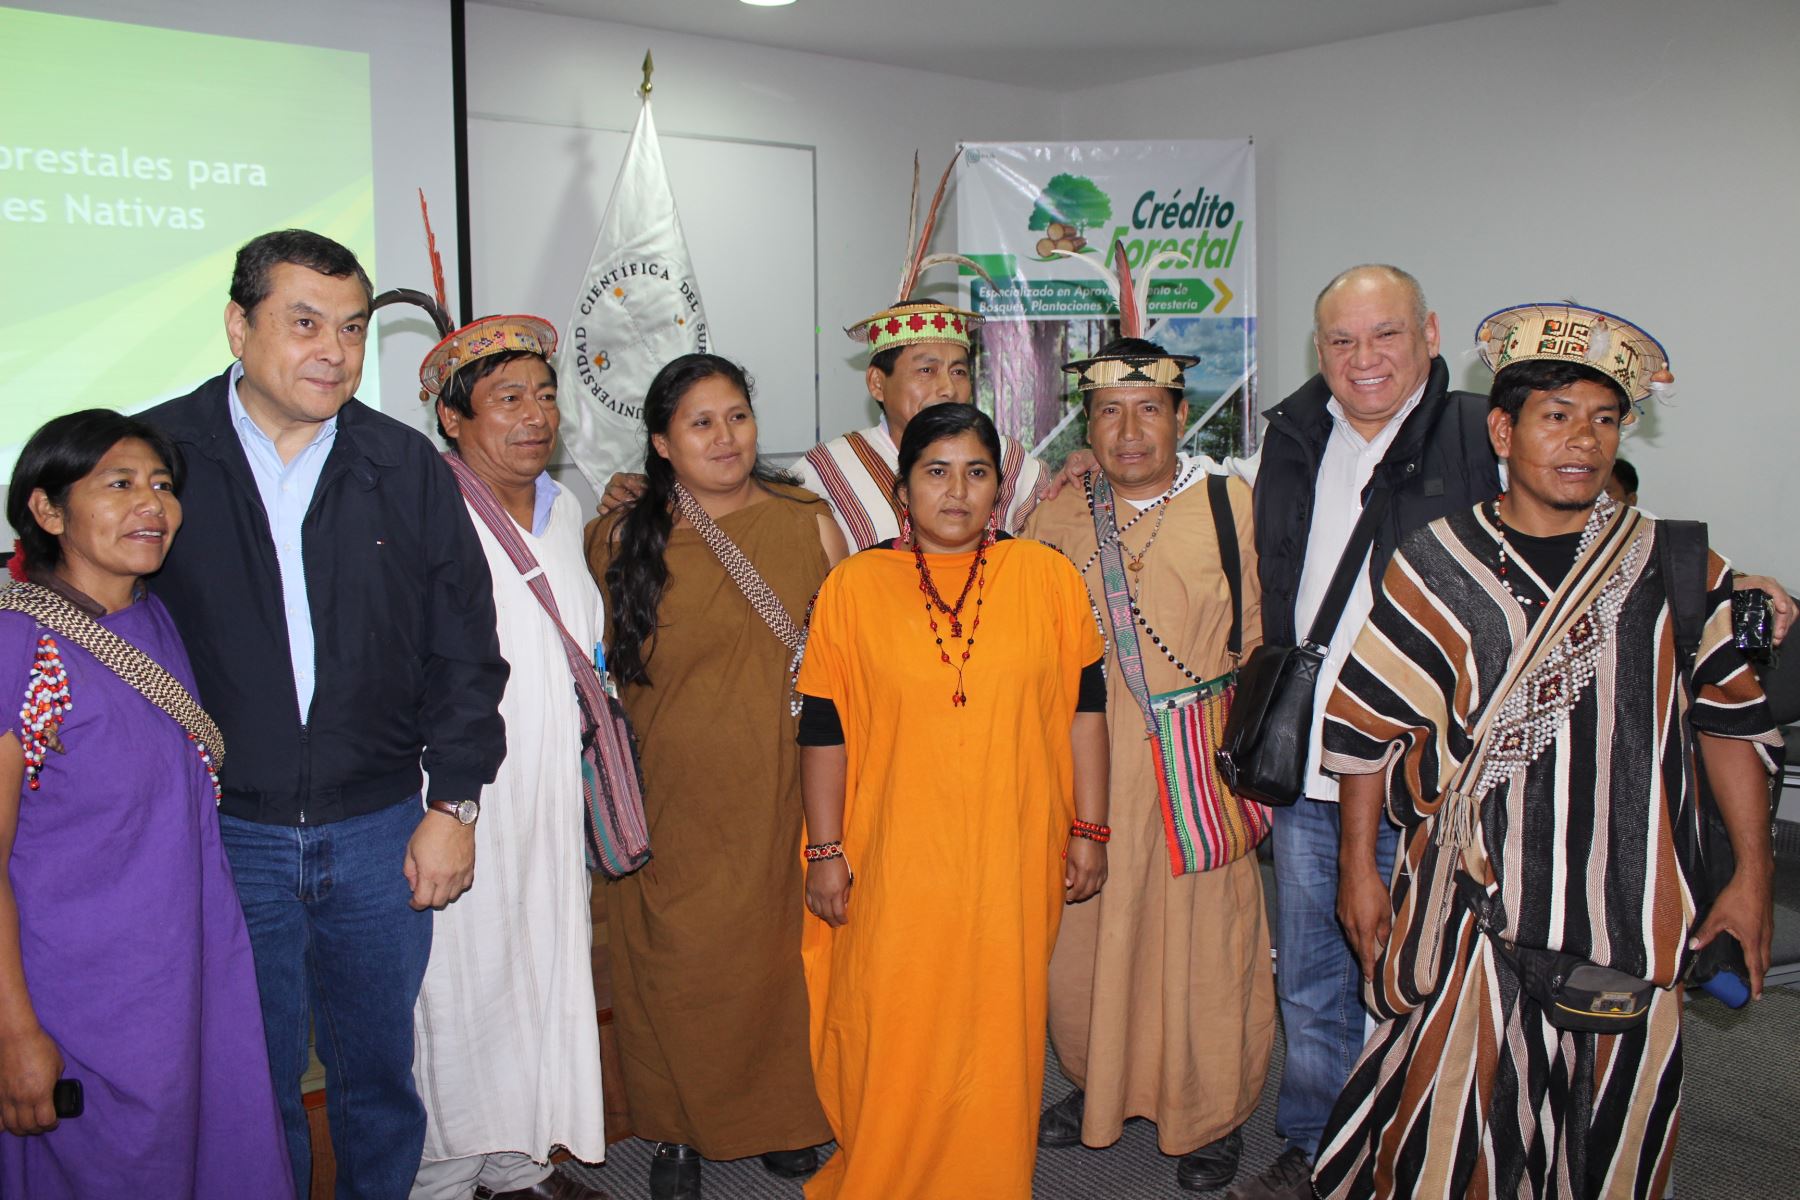 Agrobanco promueve alianzas para reforestación en comunidades nativas. Foto: Difusión.